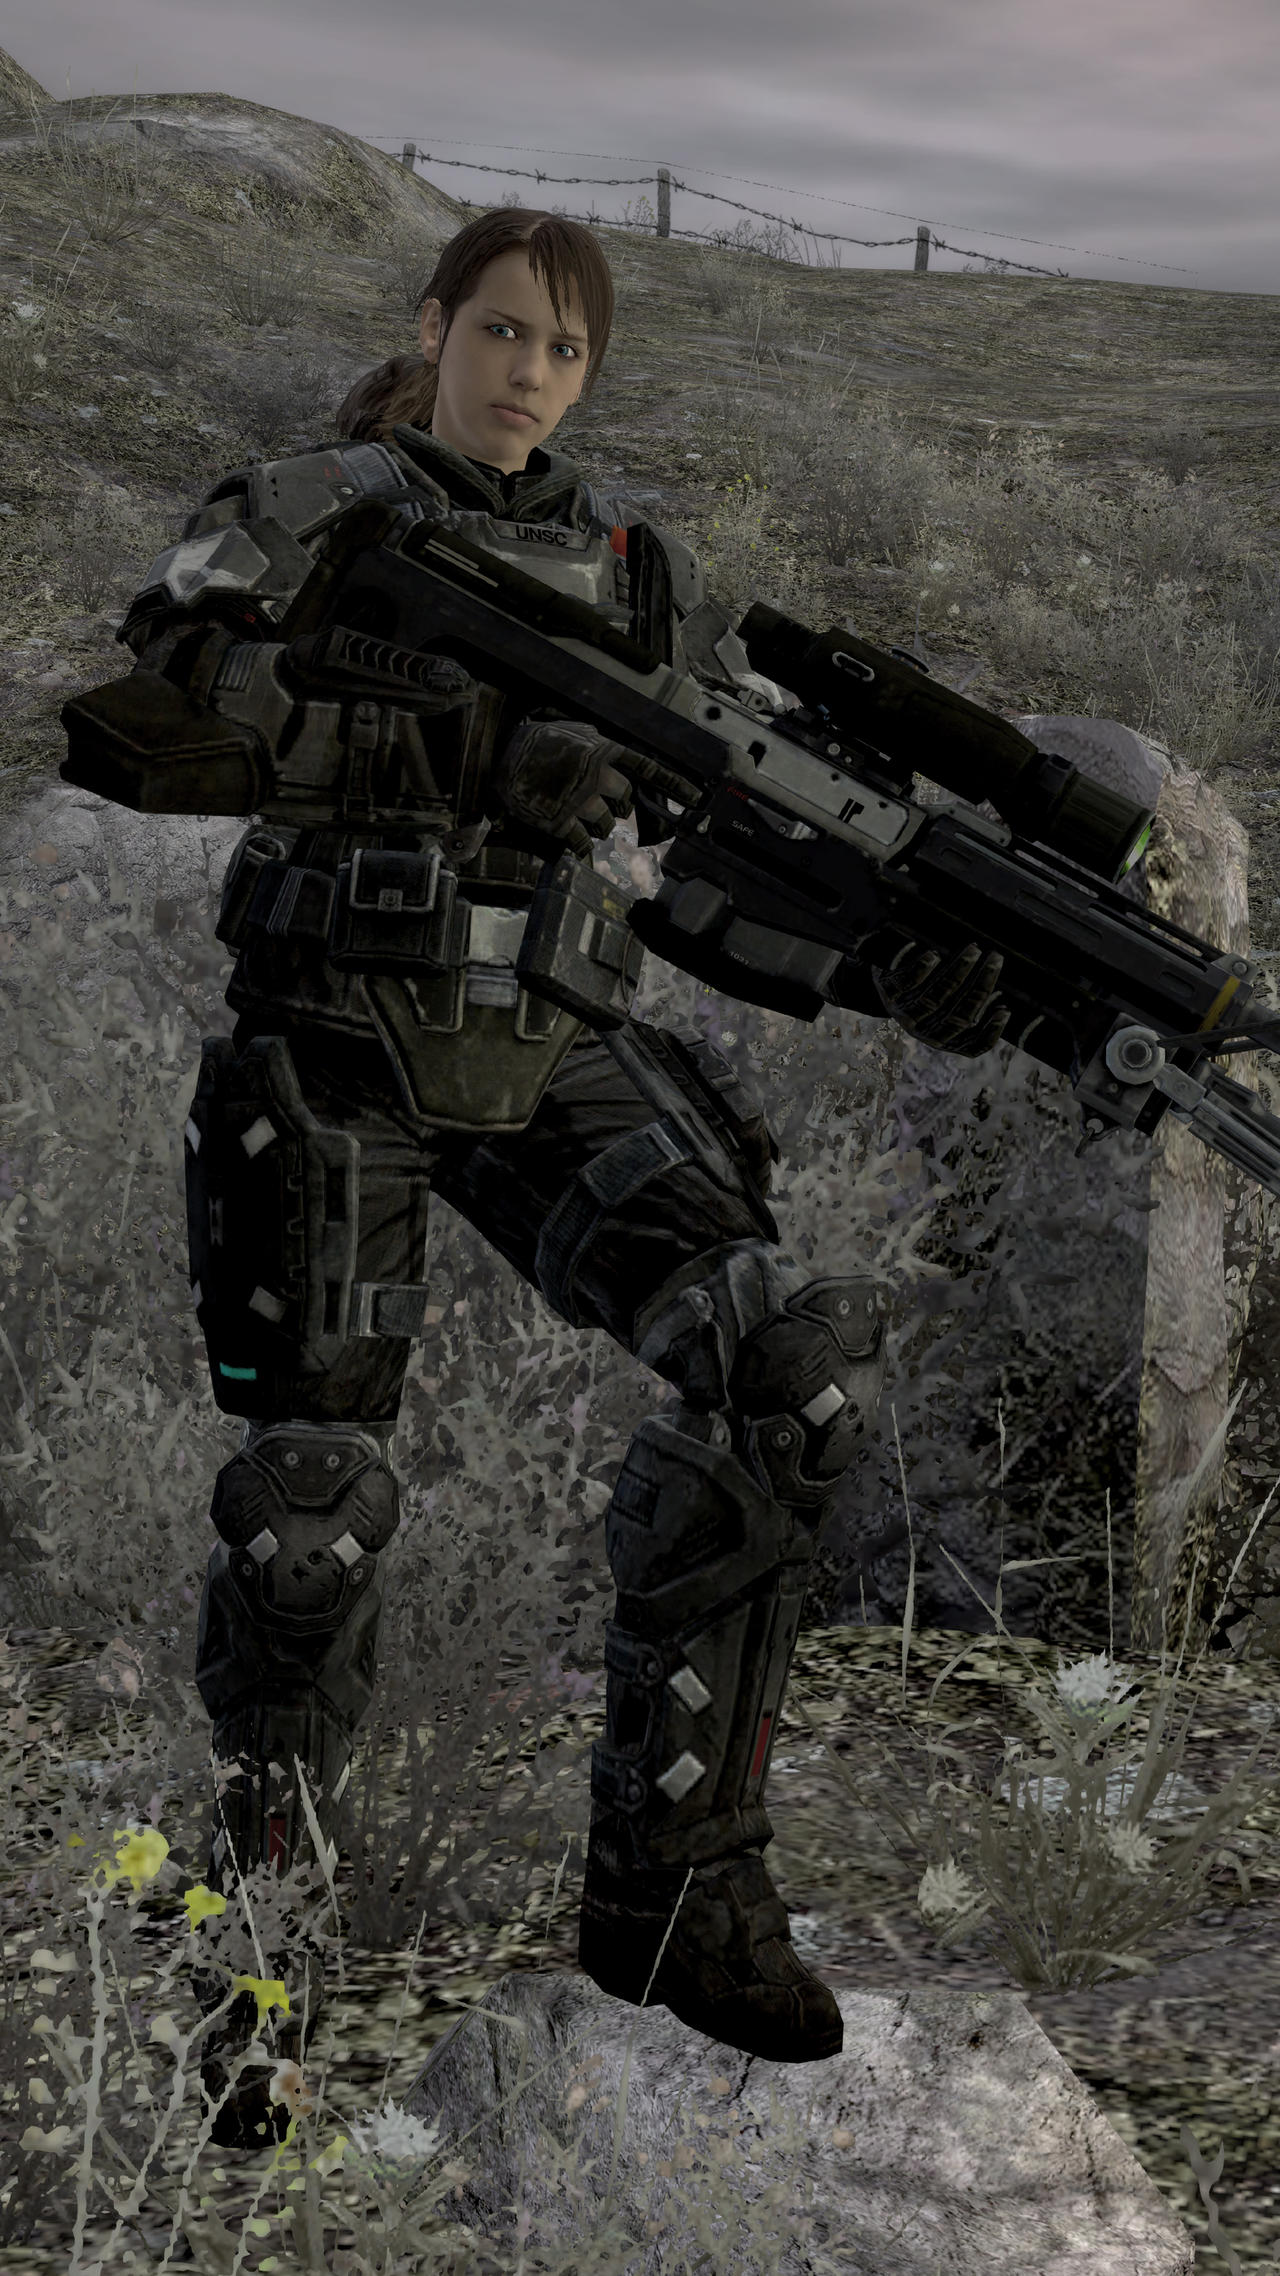 Sniper from noobs in combat by heklos1410 on DeviantArt